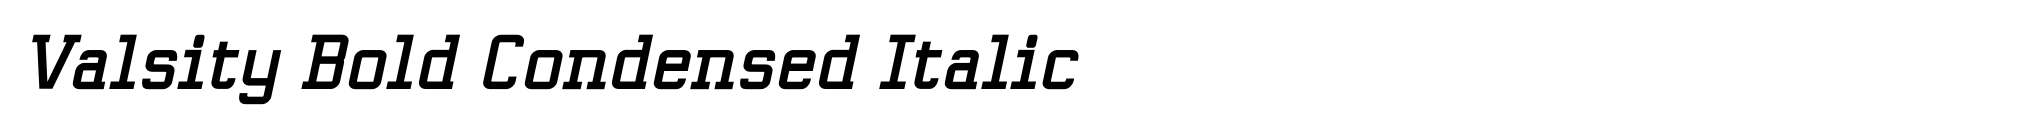 Valsity Bold Condensed Italic image